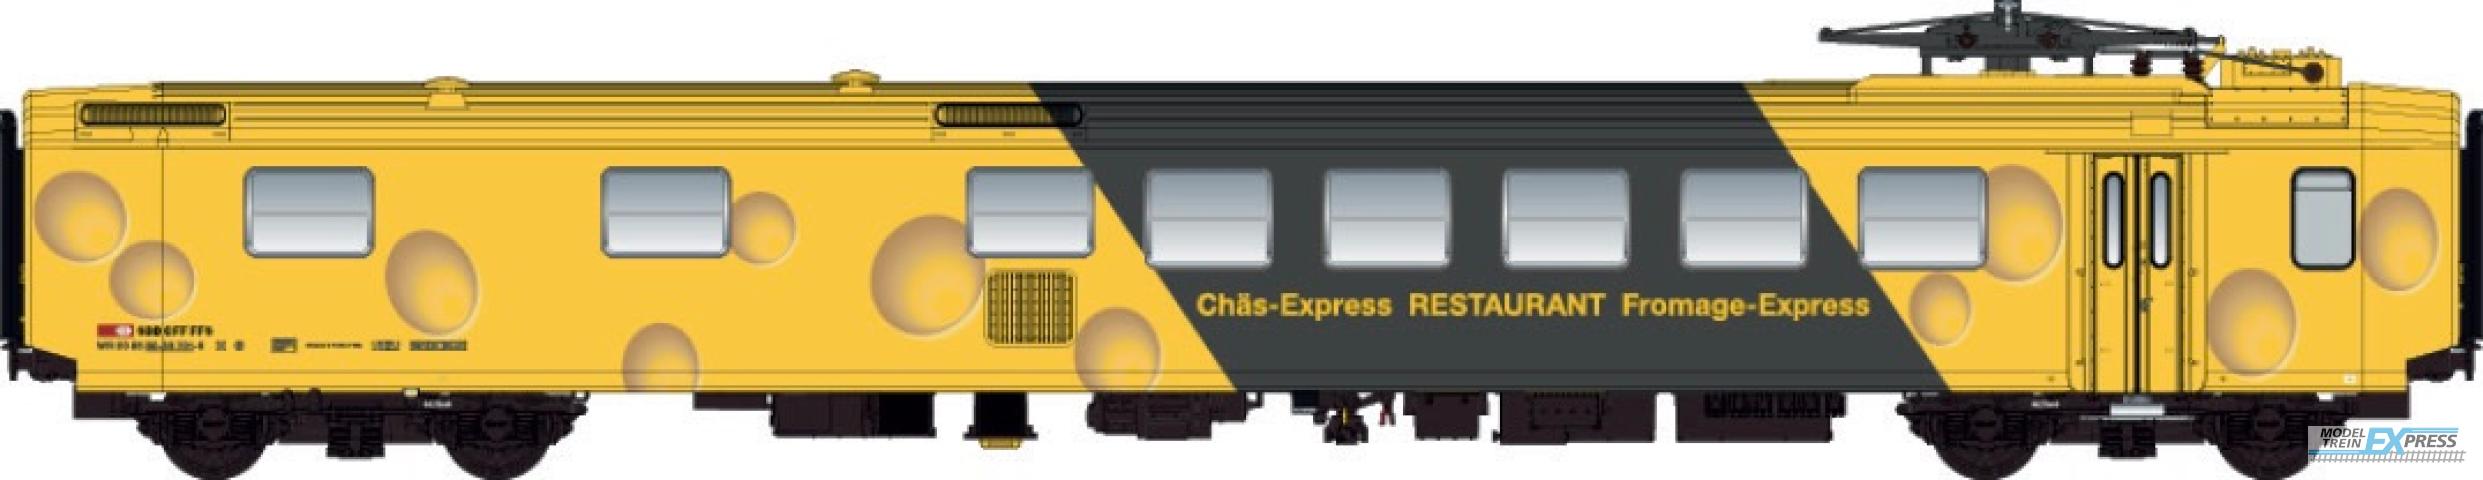 LS Models 47263DC EW I, geel, groene band, kaas livrei, nieuwe logo, Restaurant Chäs-Express opschrift  /  Ep. IV-V  /  SBB  /  HO  /  DC  /  1 P.